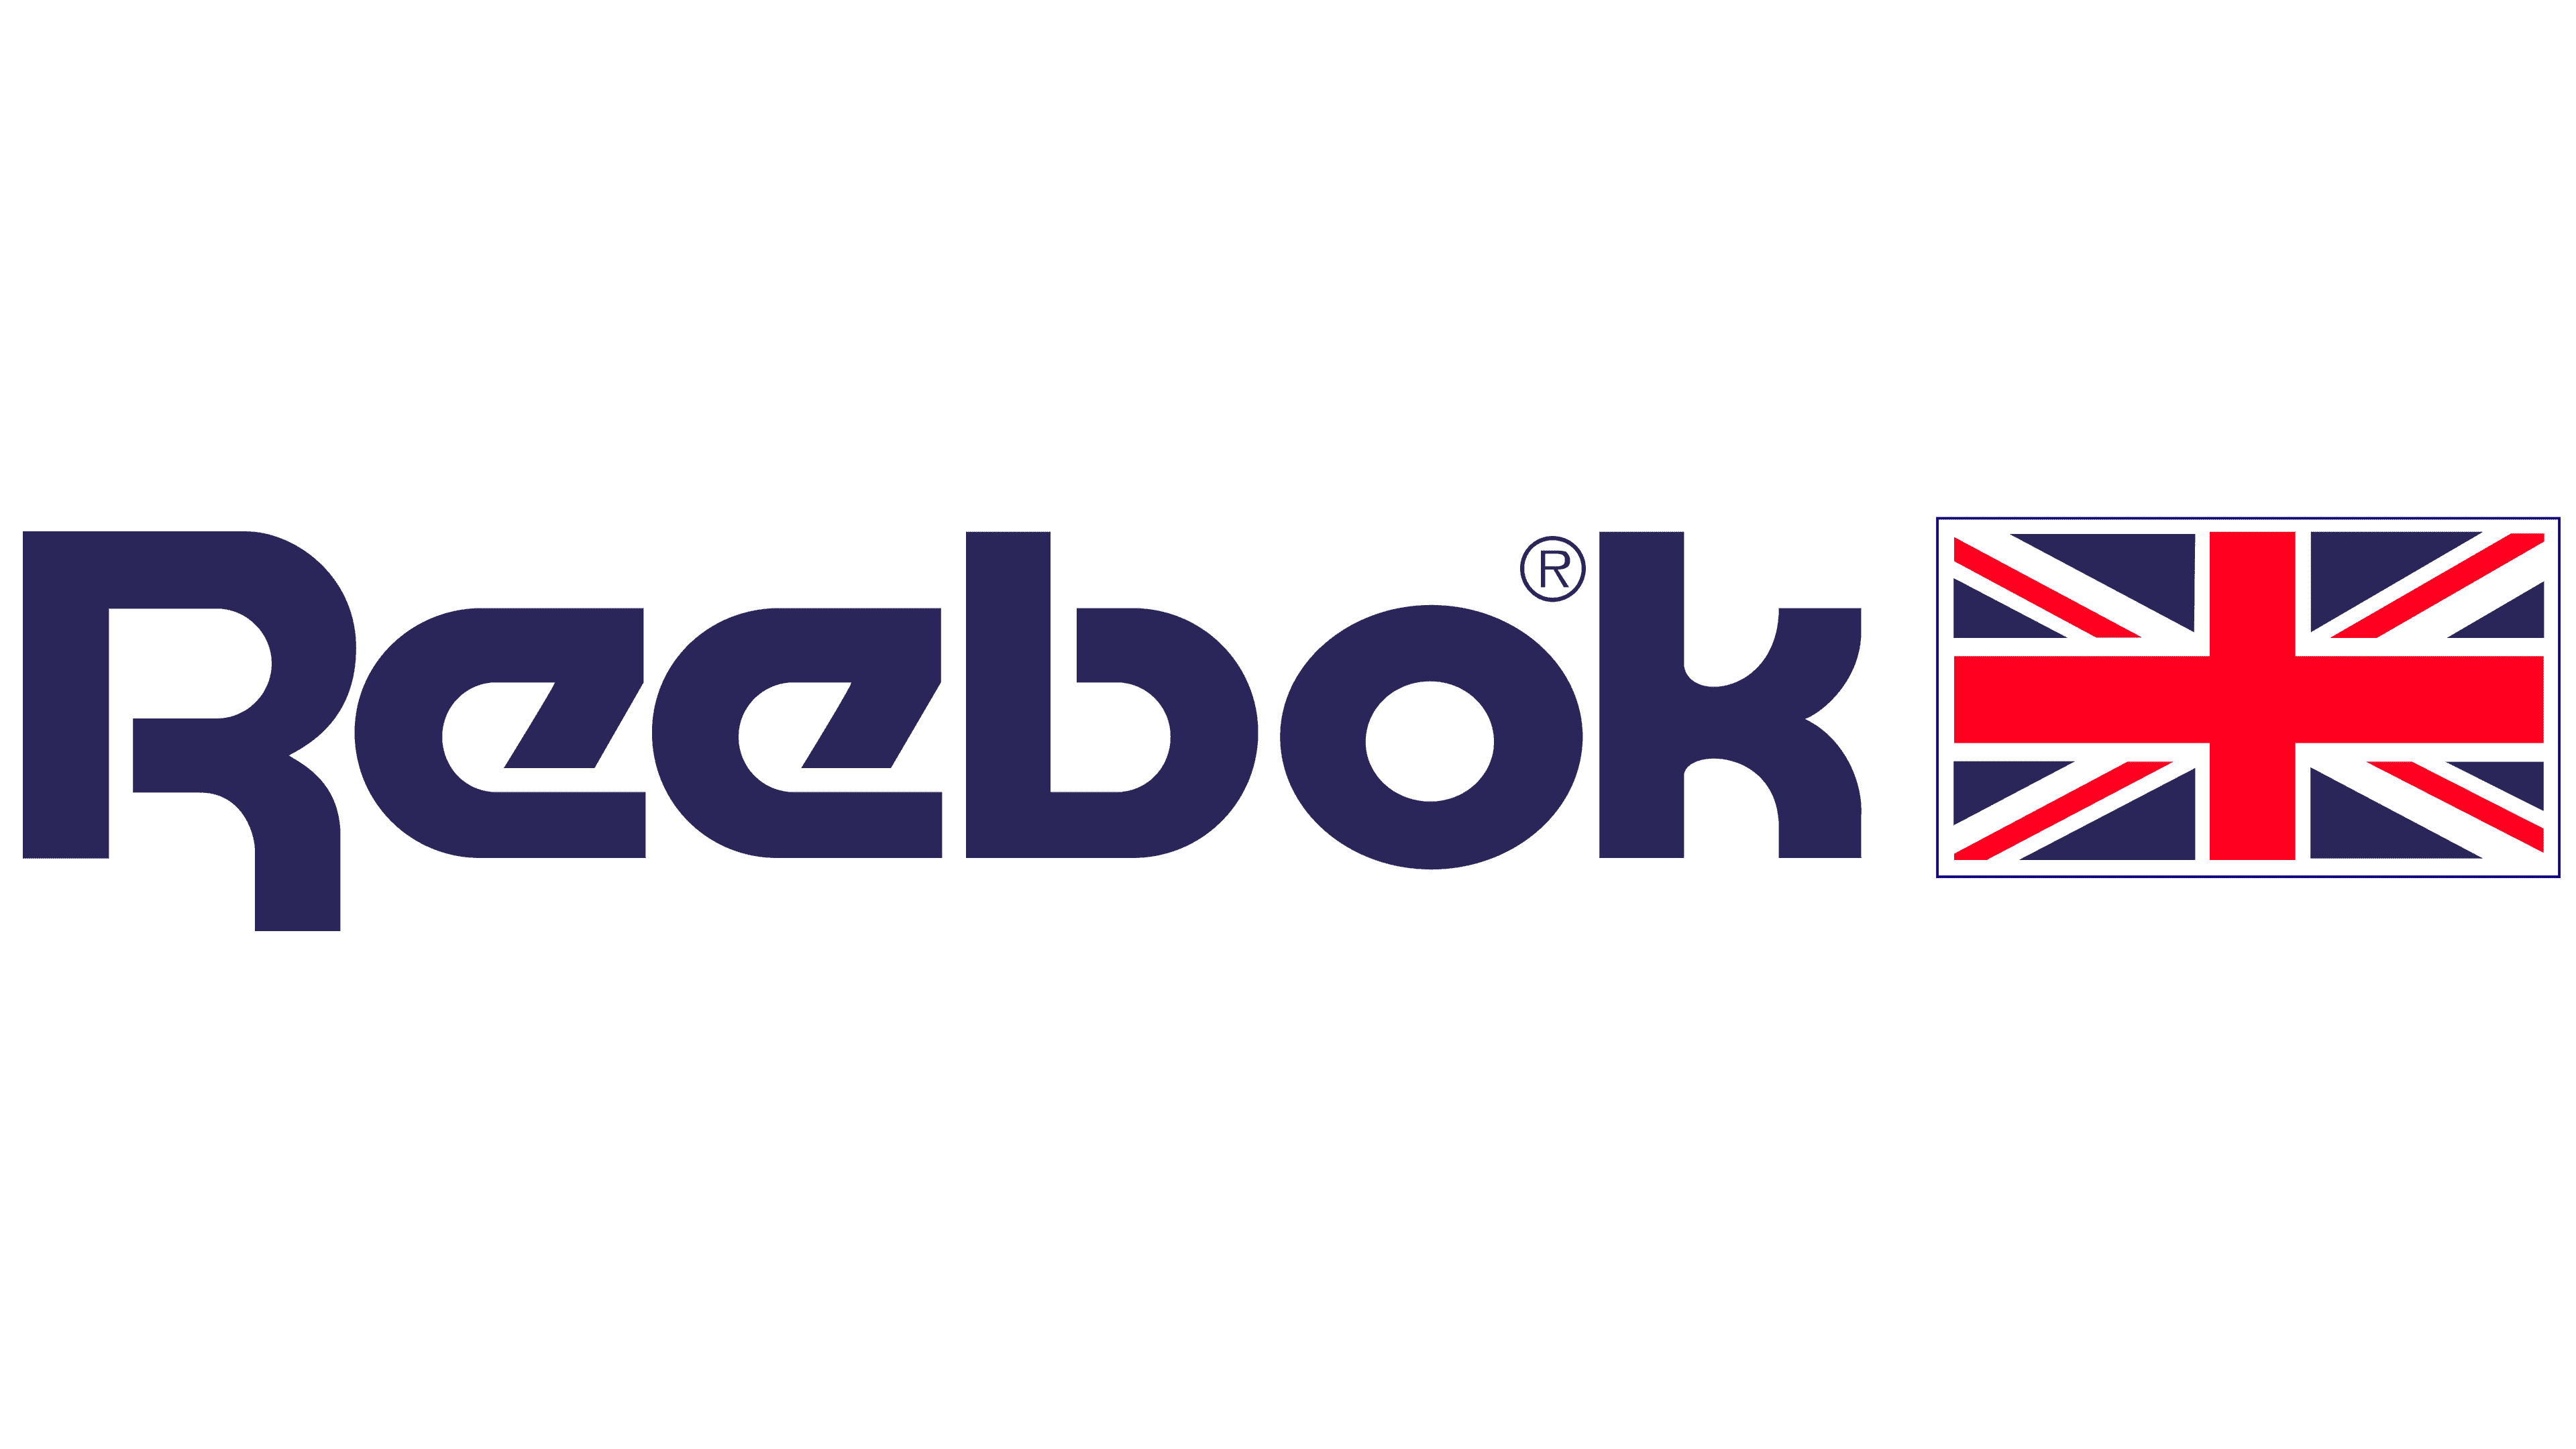 Reebok News Stream Reebok Signals Change With Launch Of New Brand Mark ...